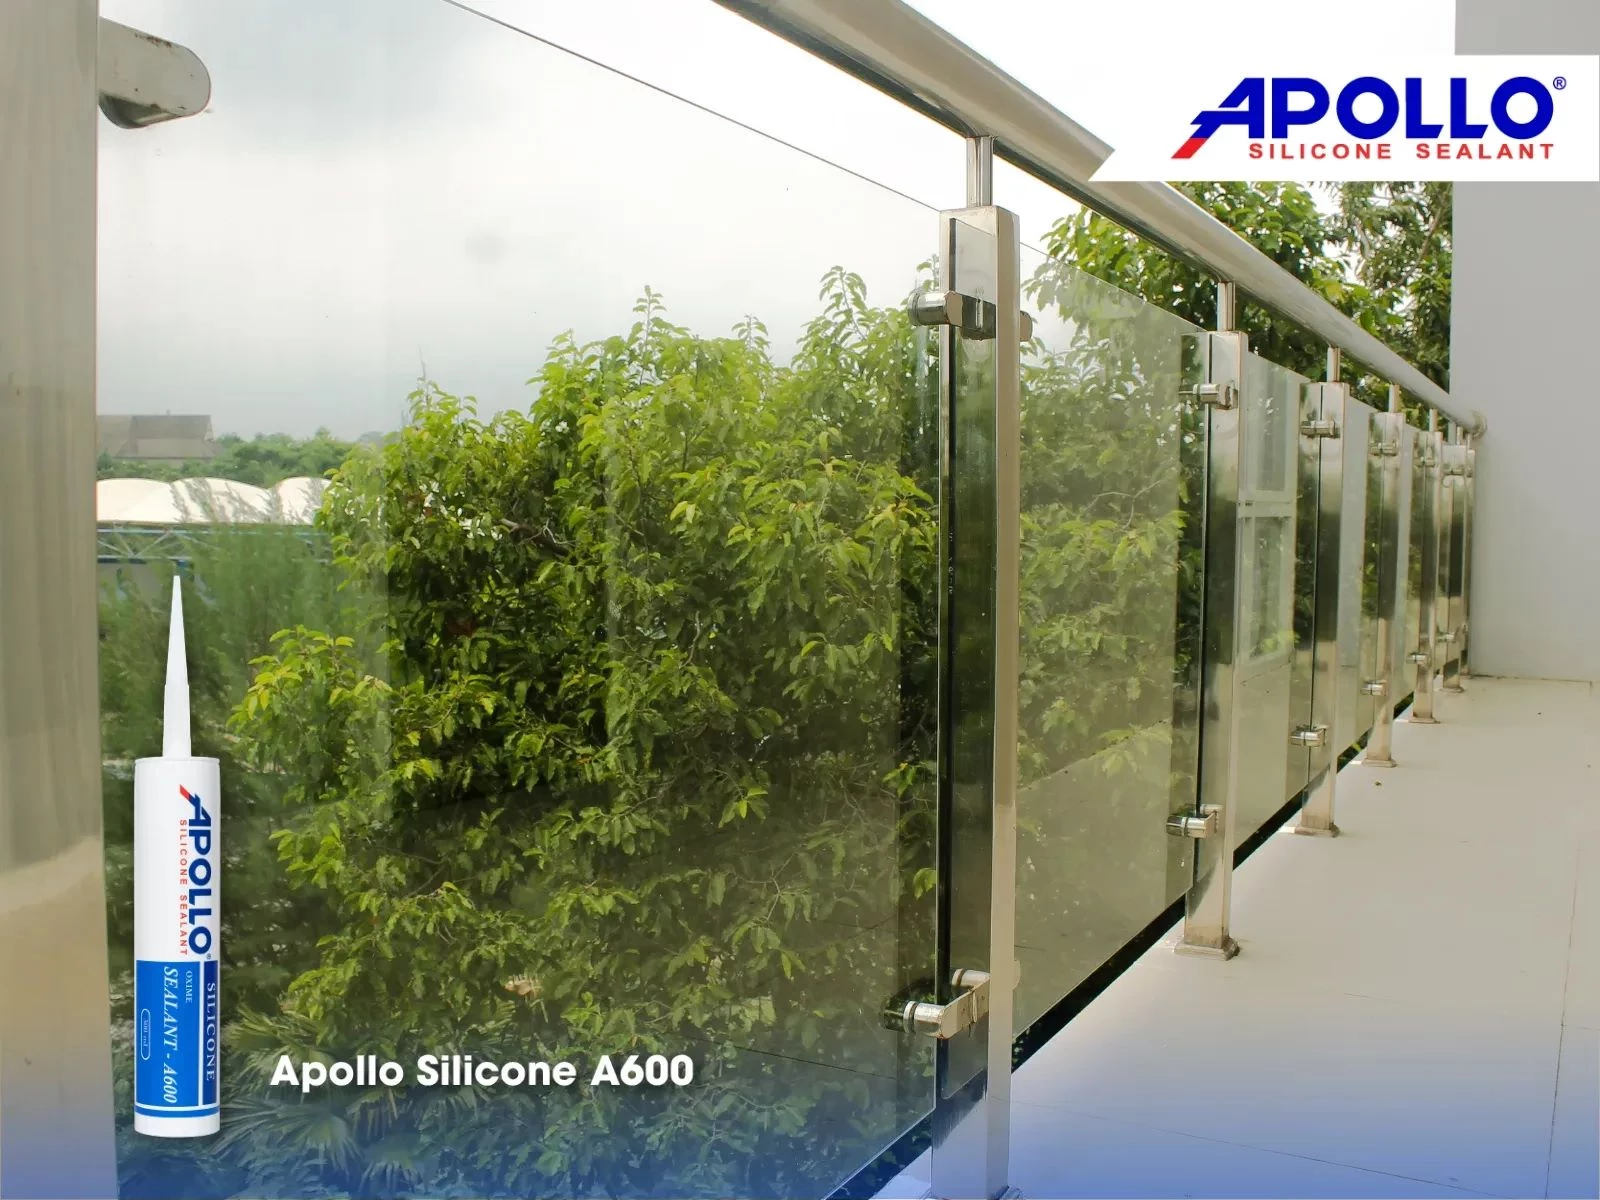 Sử dụng Apollo Silicone A600 để trám vách kính ngoài trời 